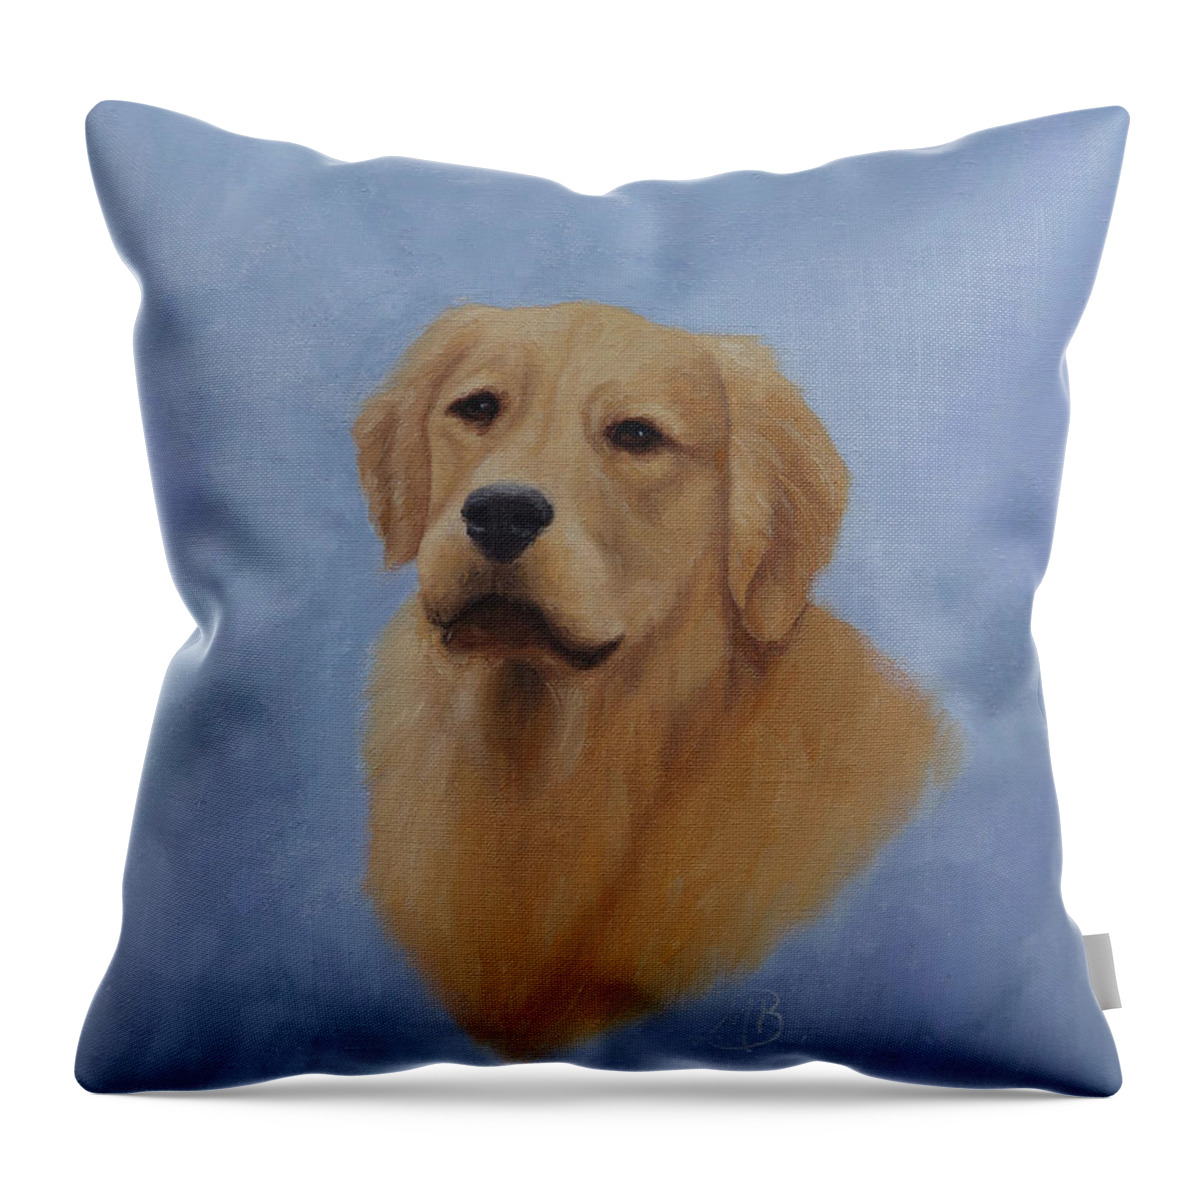 Animal Art Throw Pillow featuring the painting Golden Retriever Portrait by Monica Burnette